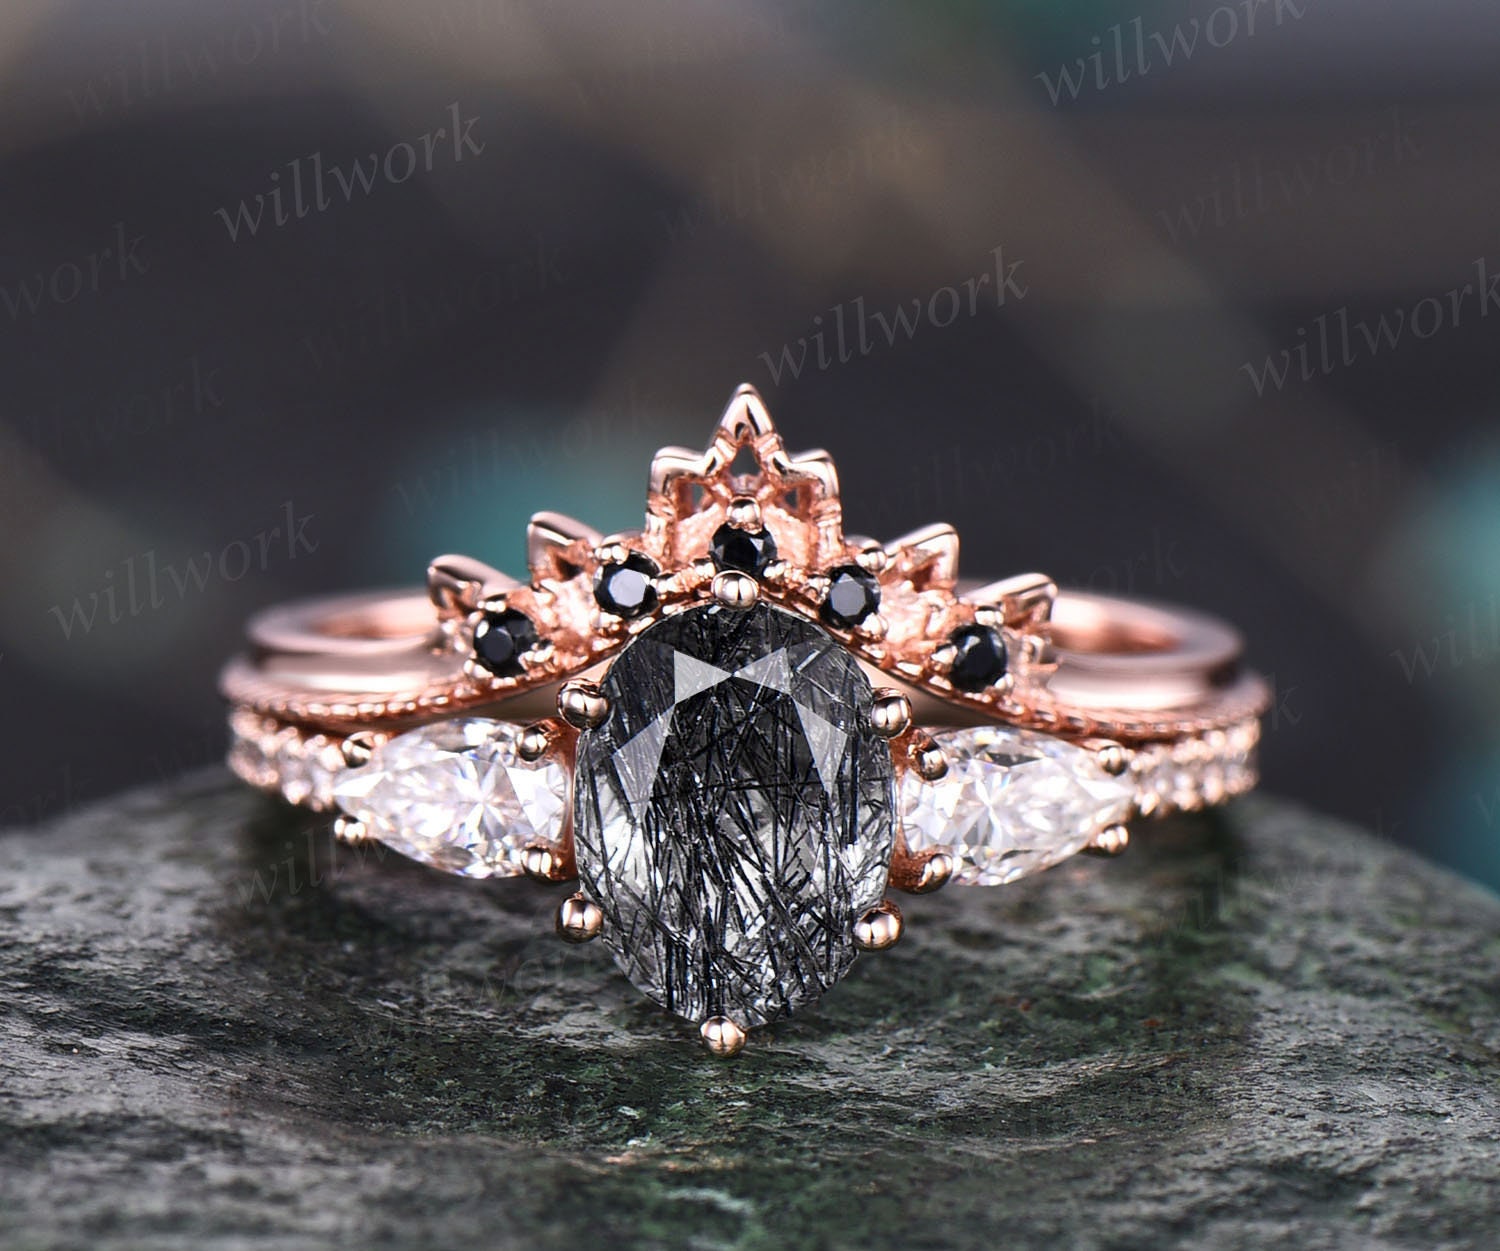 Buy CERTIFIED 0.83 Carat (ctw) 14k White Gold Round & Baguette Diamond  Ladies Vintage Bridal Engagement Ring Set Online at Dazzling Rock